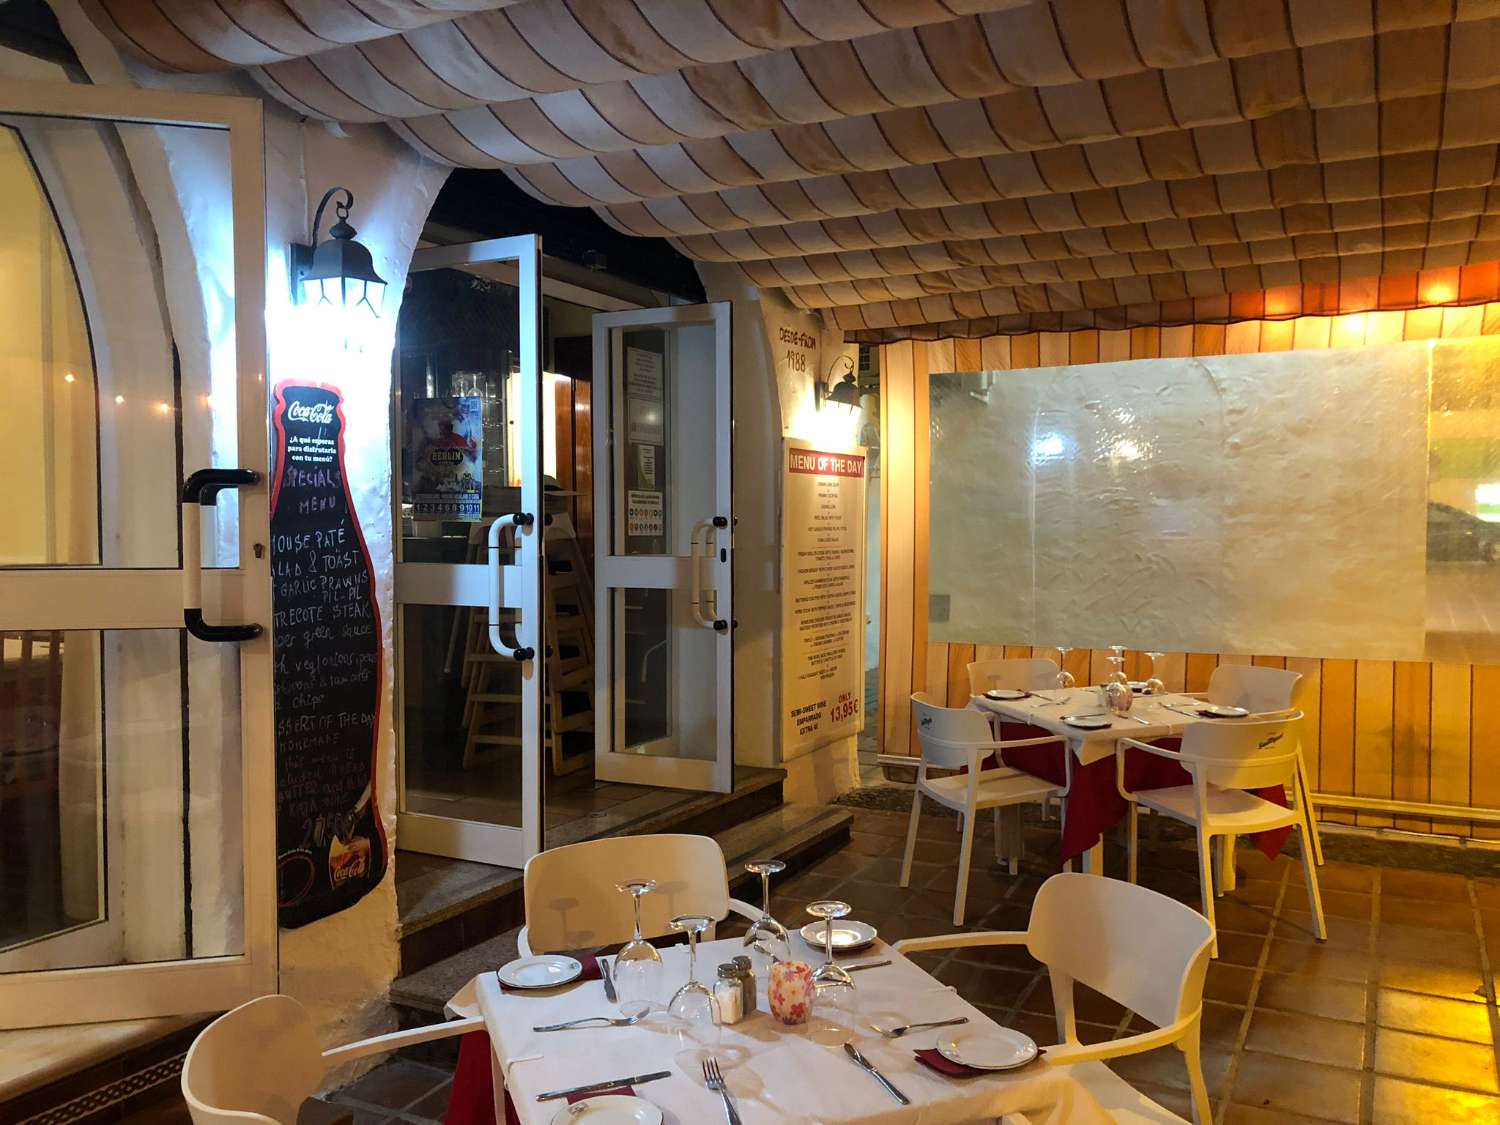 Restaurant for sale in Benalmadena Costa del Sol - IDEAL BUFFET - Great TURNKEY Restaurant